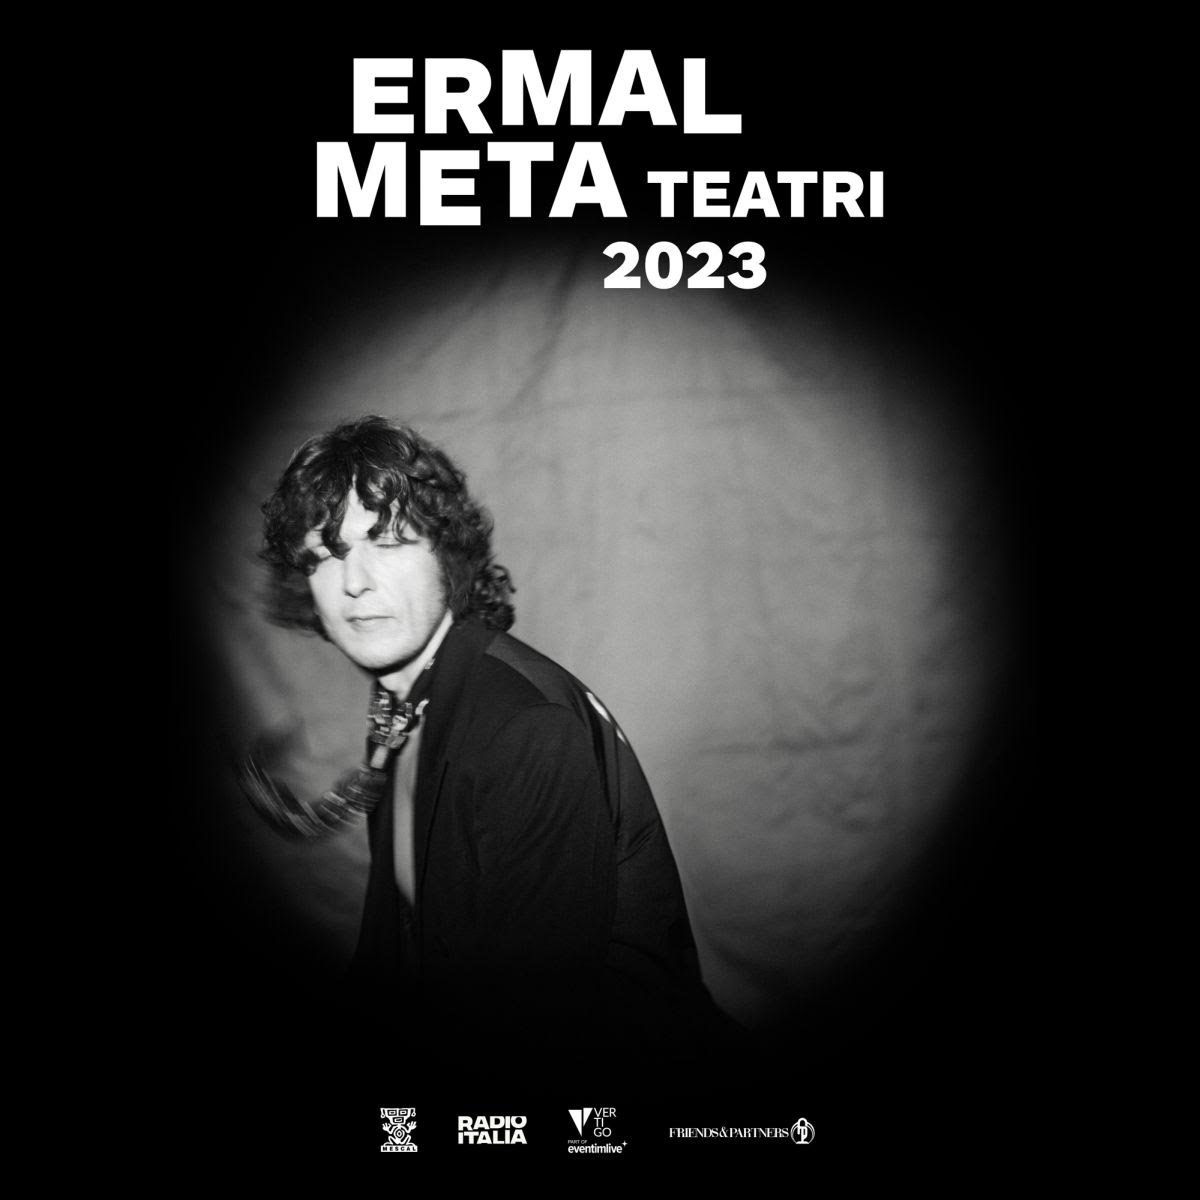 Nuove date per la tournée di Ermal Meta